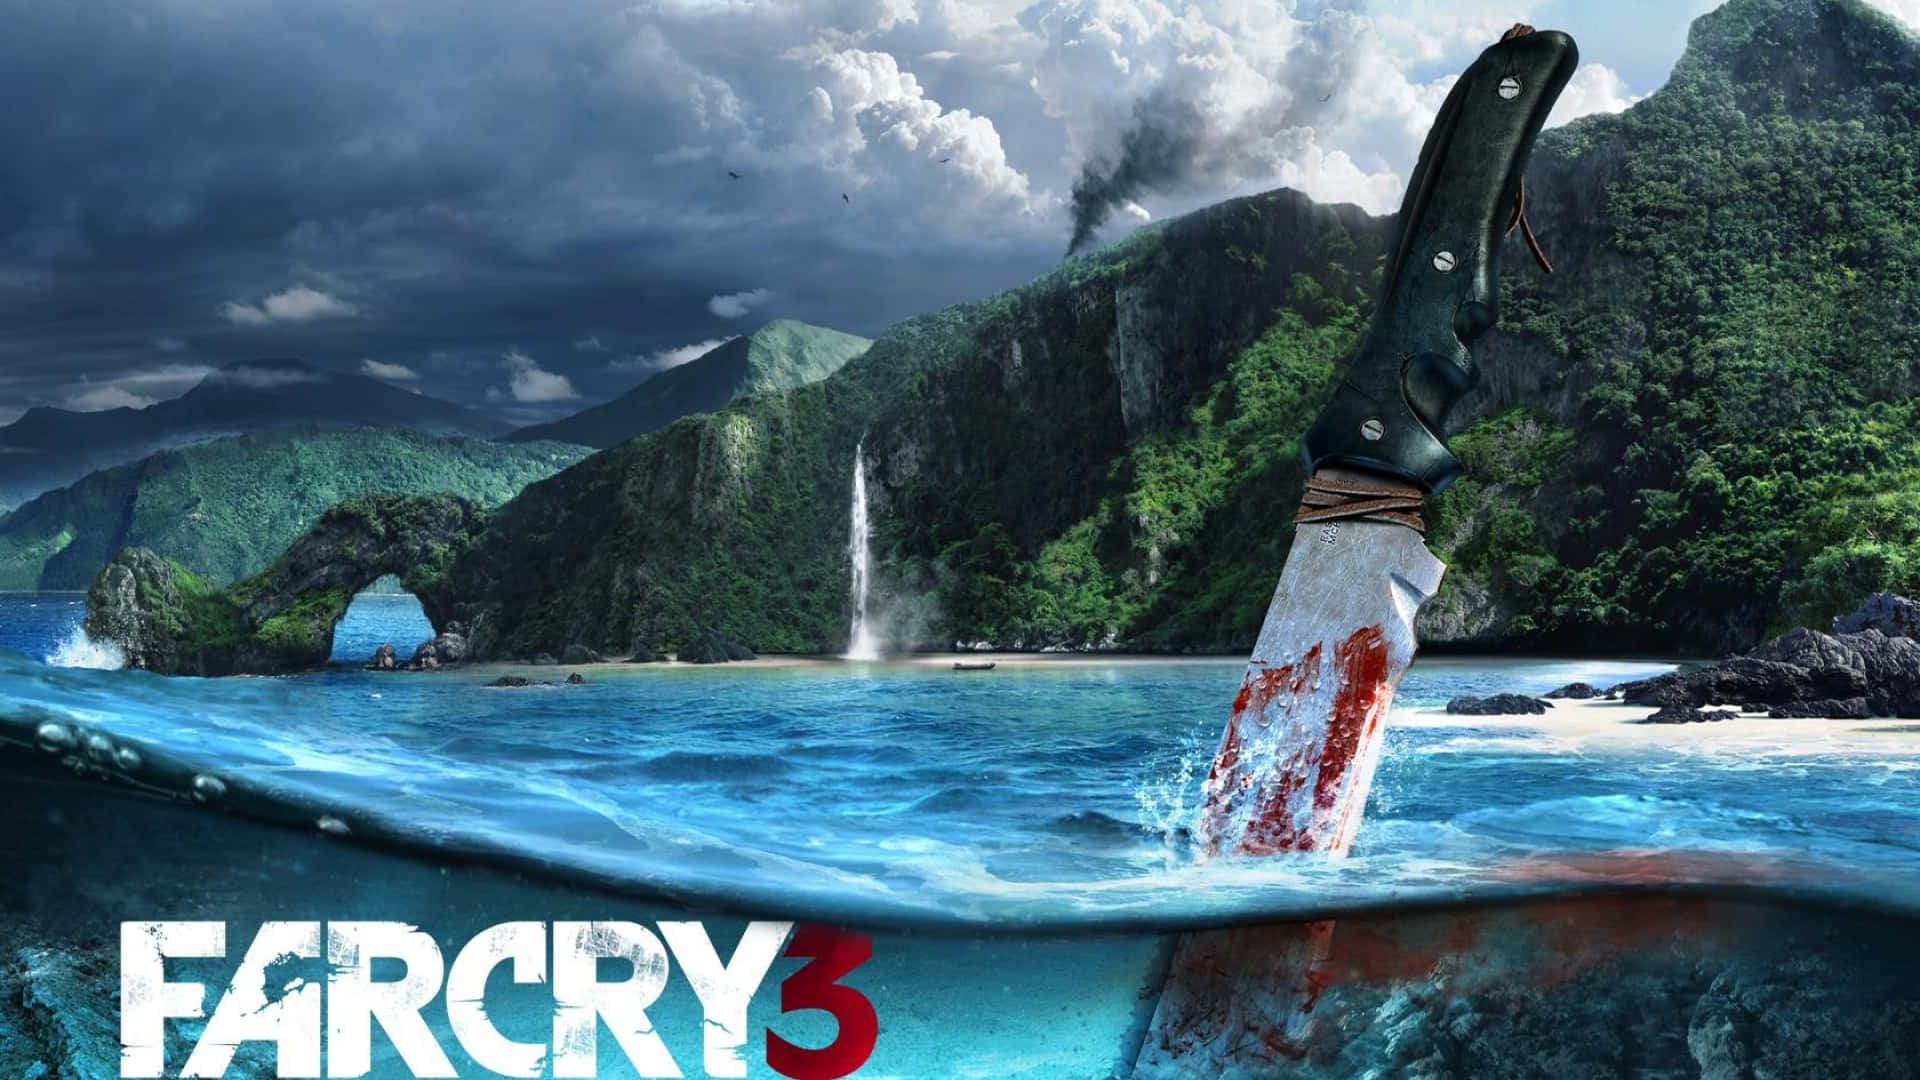 Explore the open-world of Far Cry 3 adventure